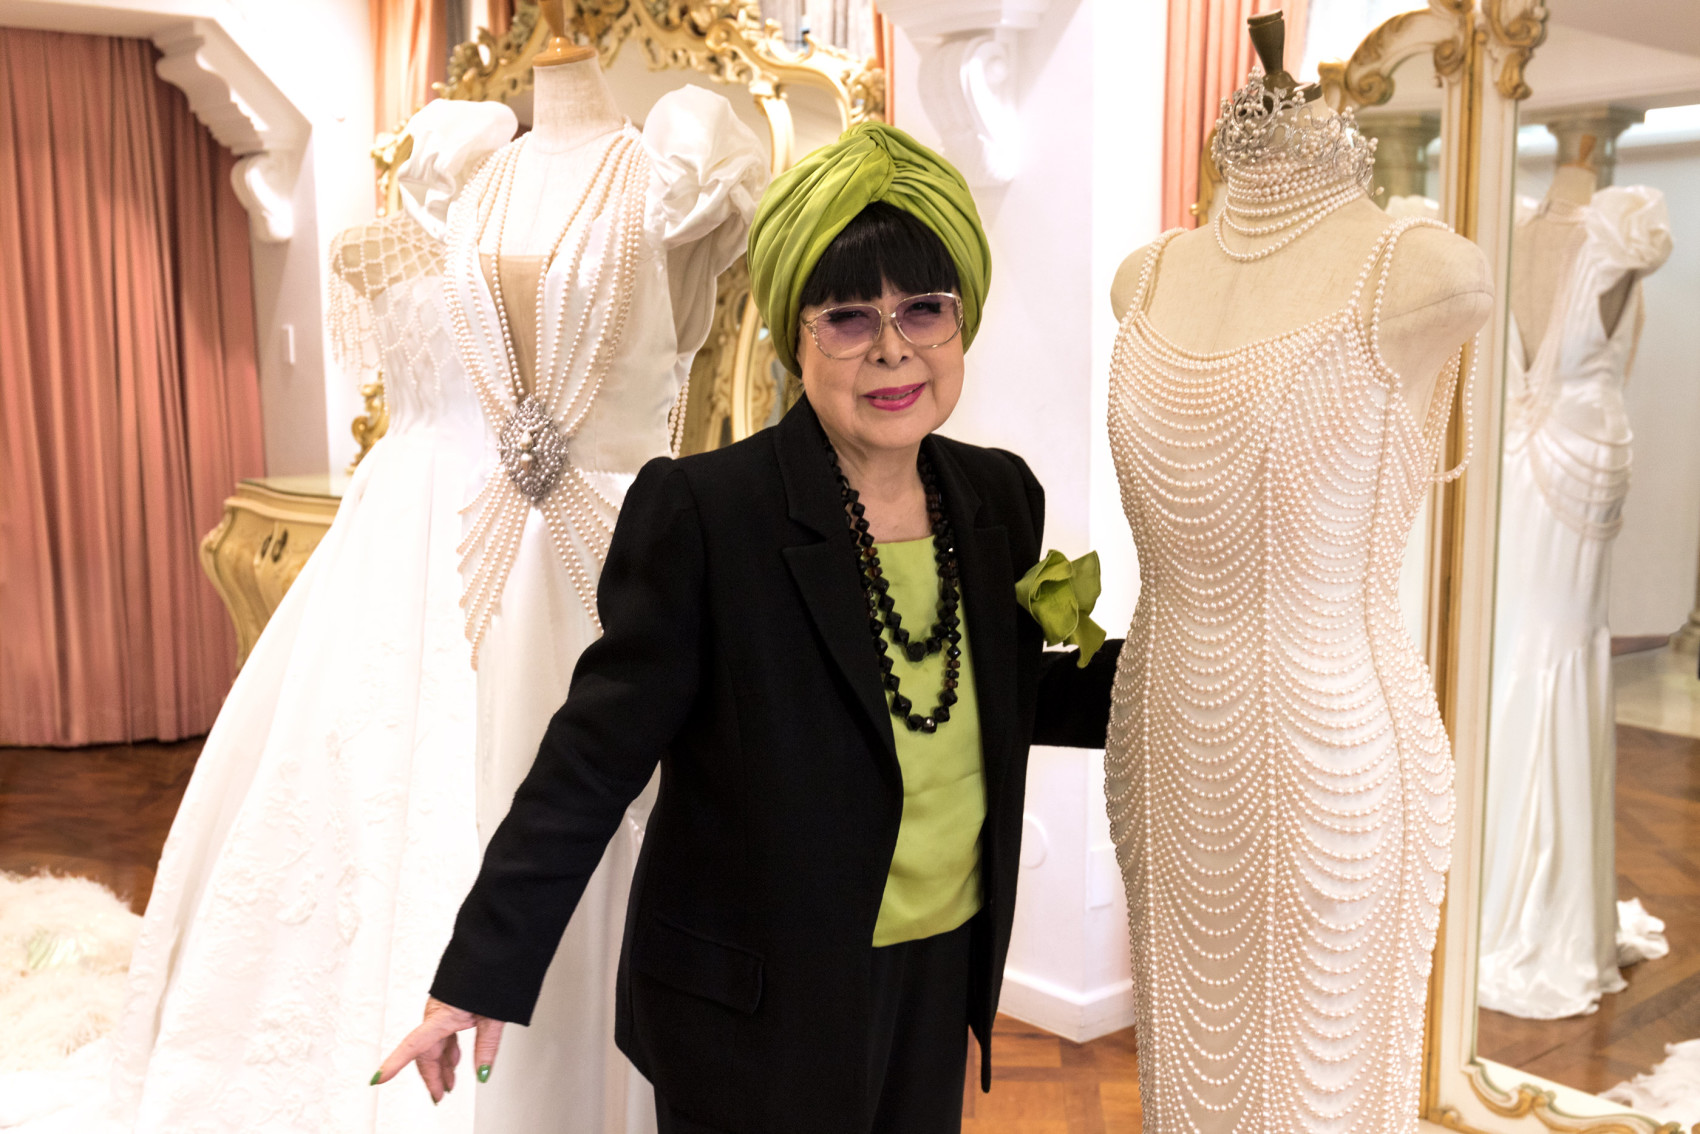 Renowned bridal designer Yumi Katsura’s walk down the aisle to